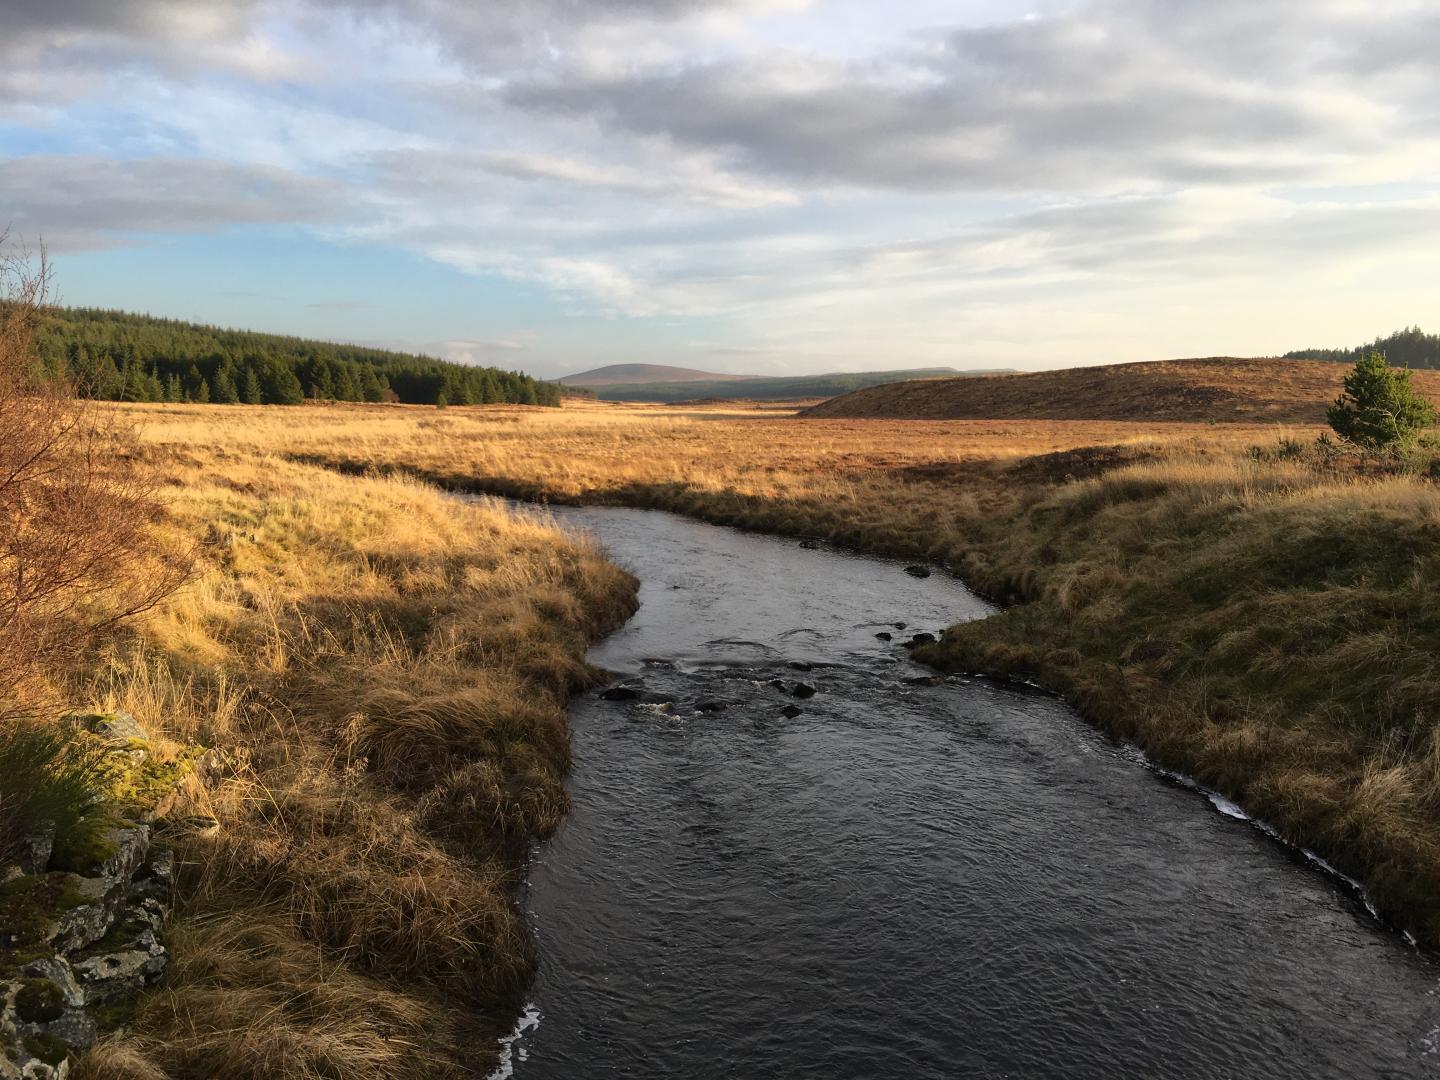 River Draining a Peatland in Scotland